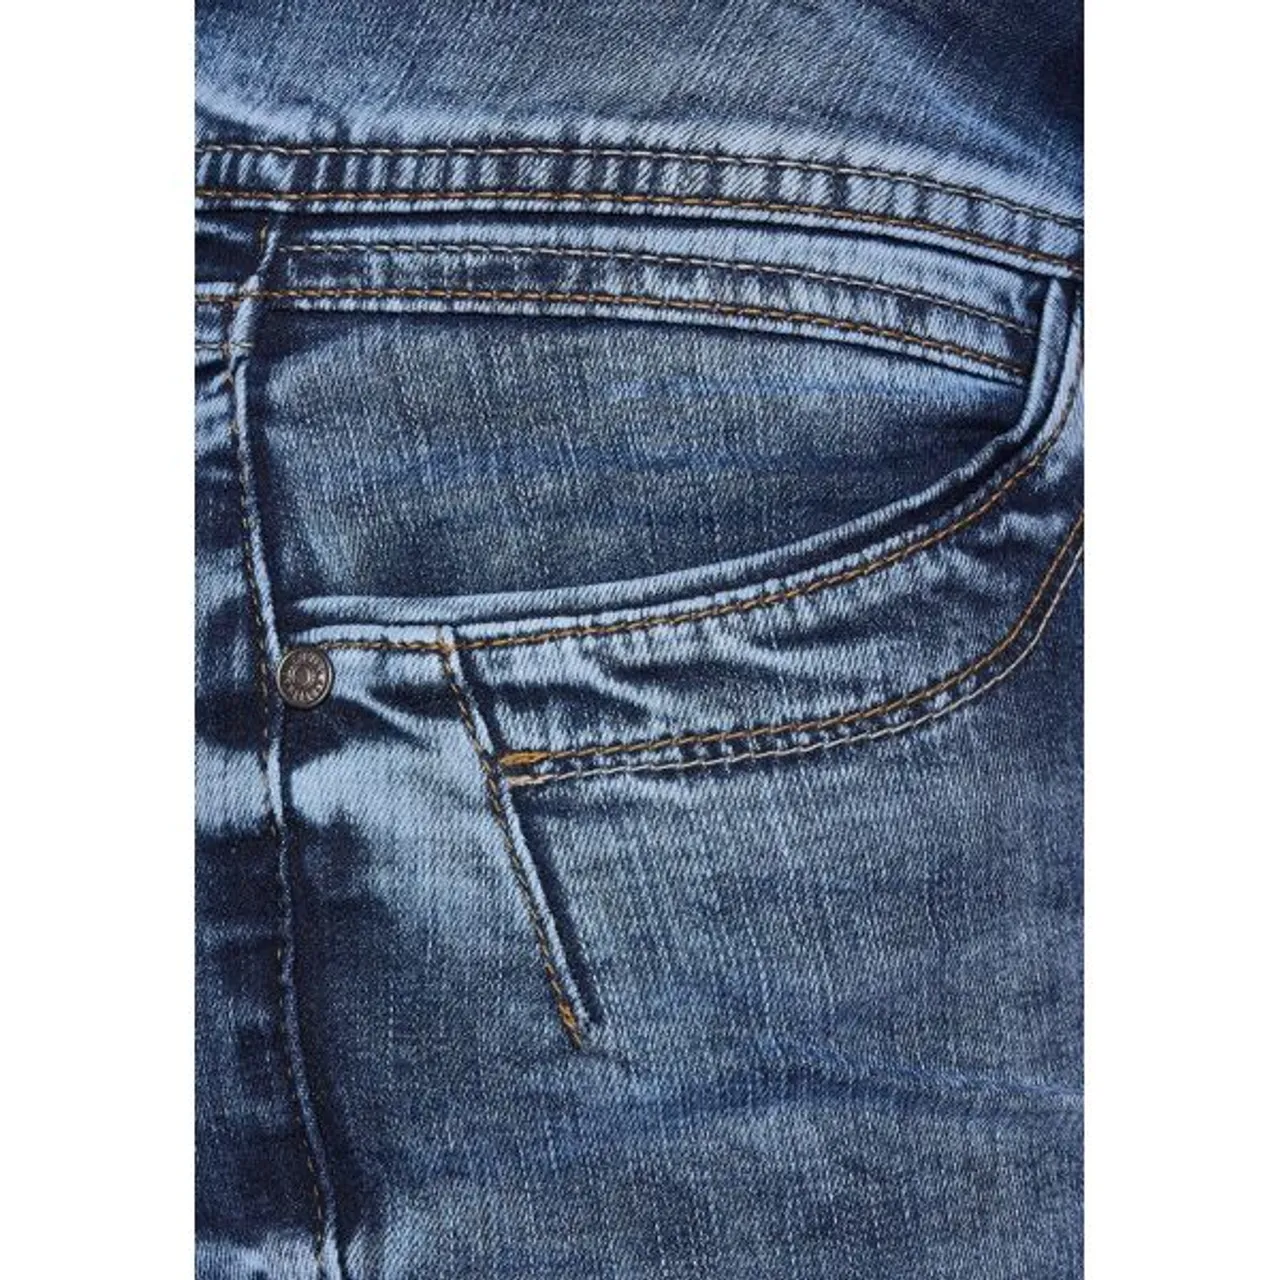 Comfort-fit-Jeans STREET ONE Gr. 27, Länge 30, blau (authentic indigo wash) Damen Jeans High-Waist-Jeans